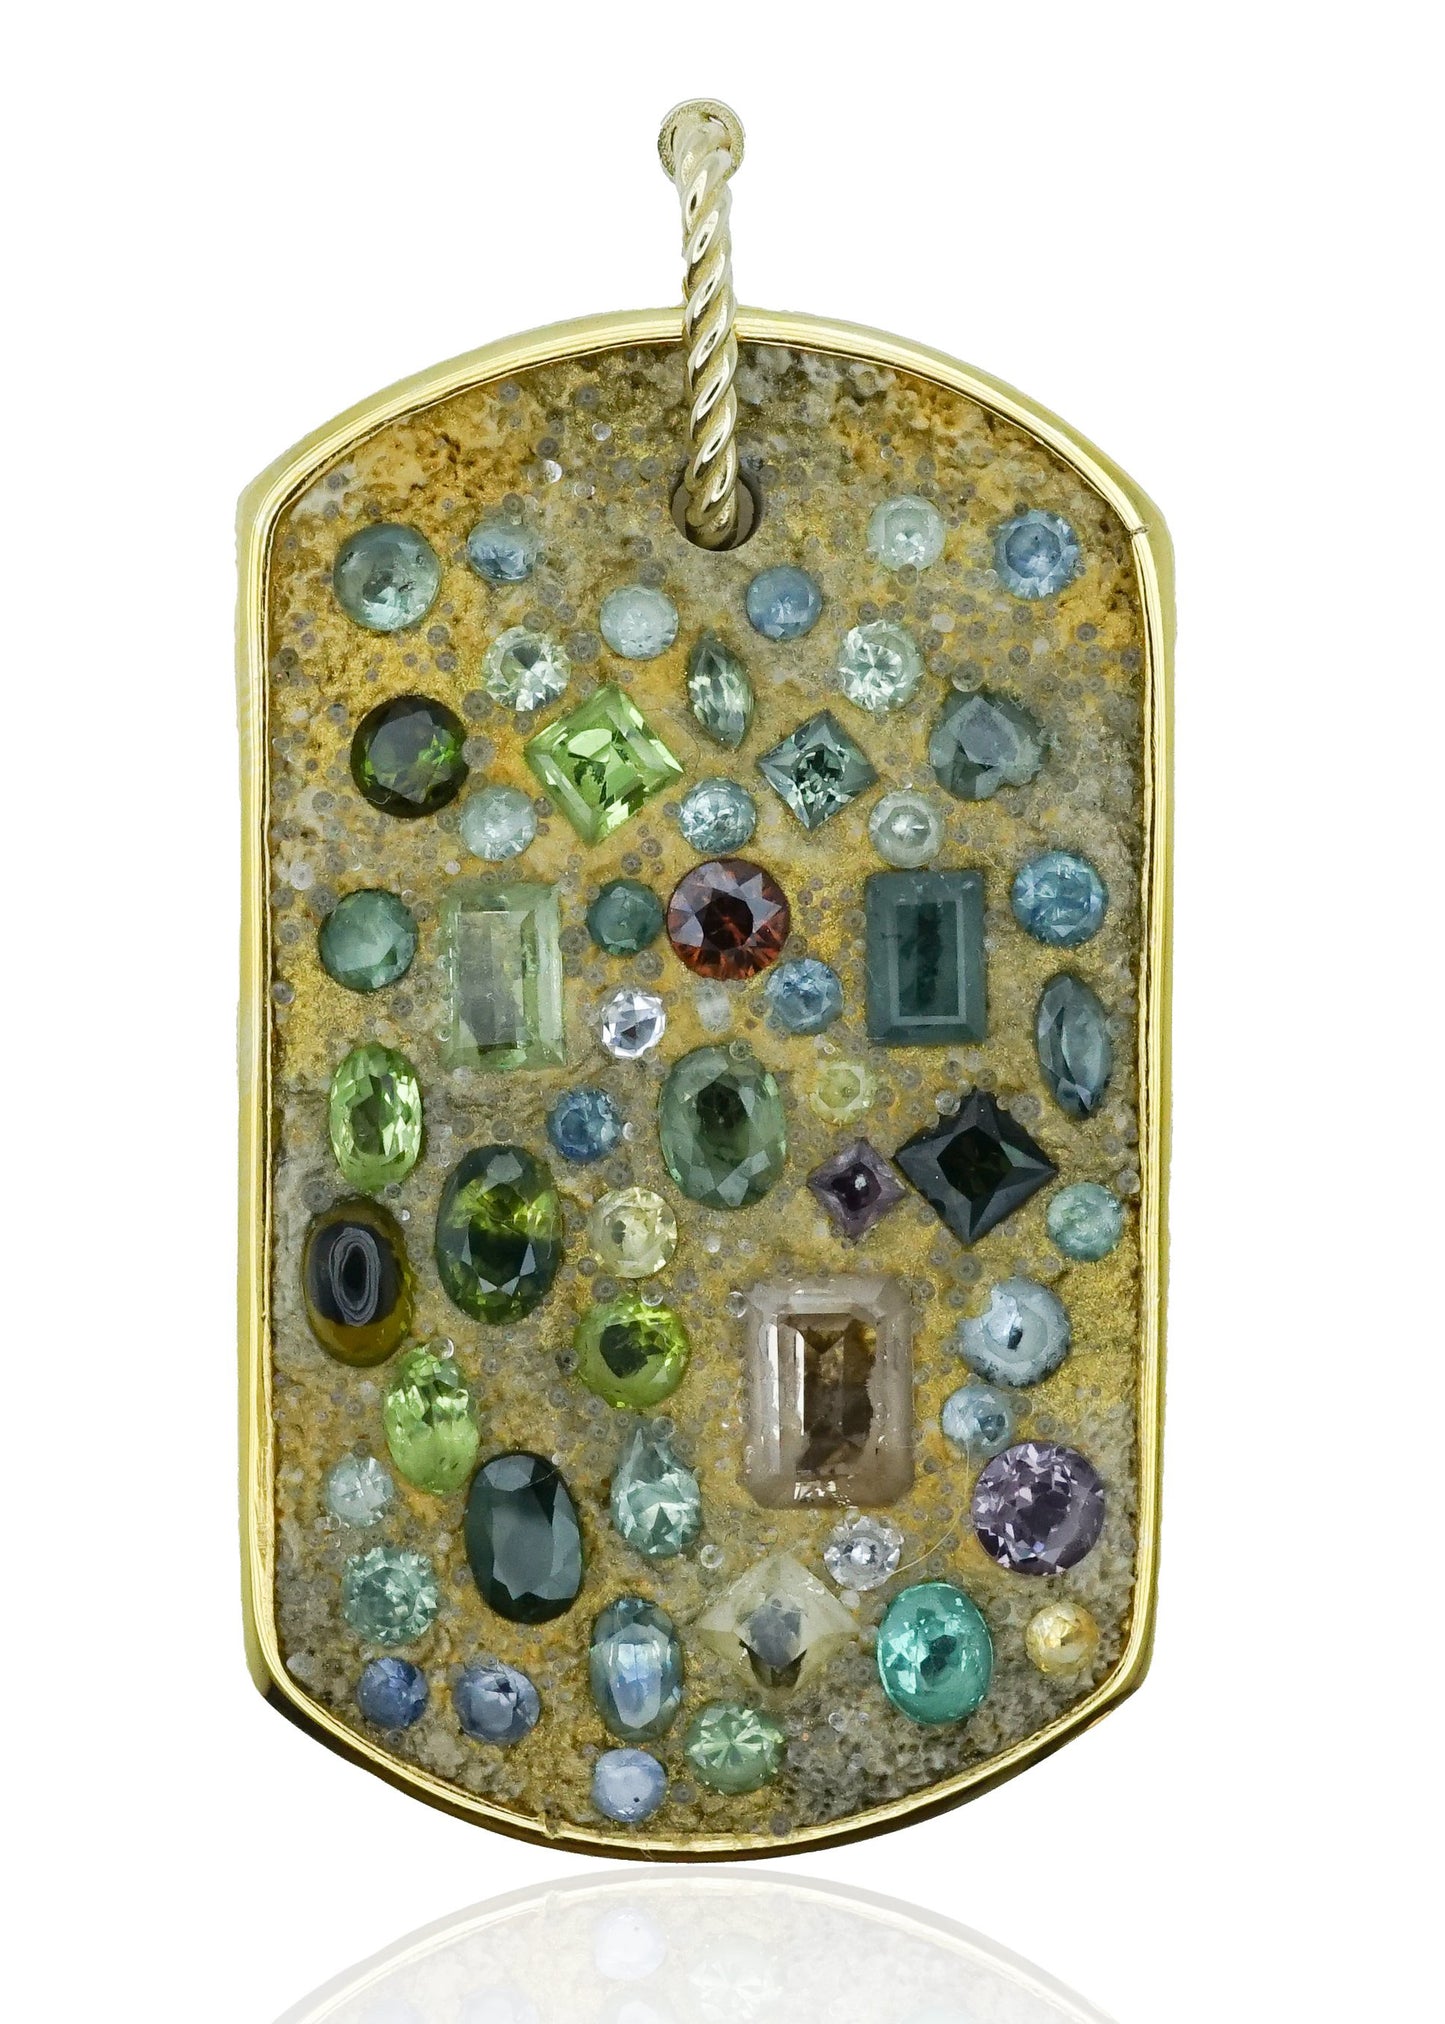 XL Silver Tag Pendant with Precious Stones